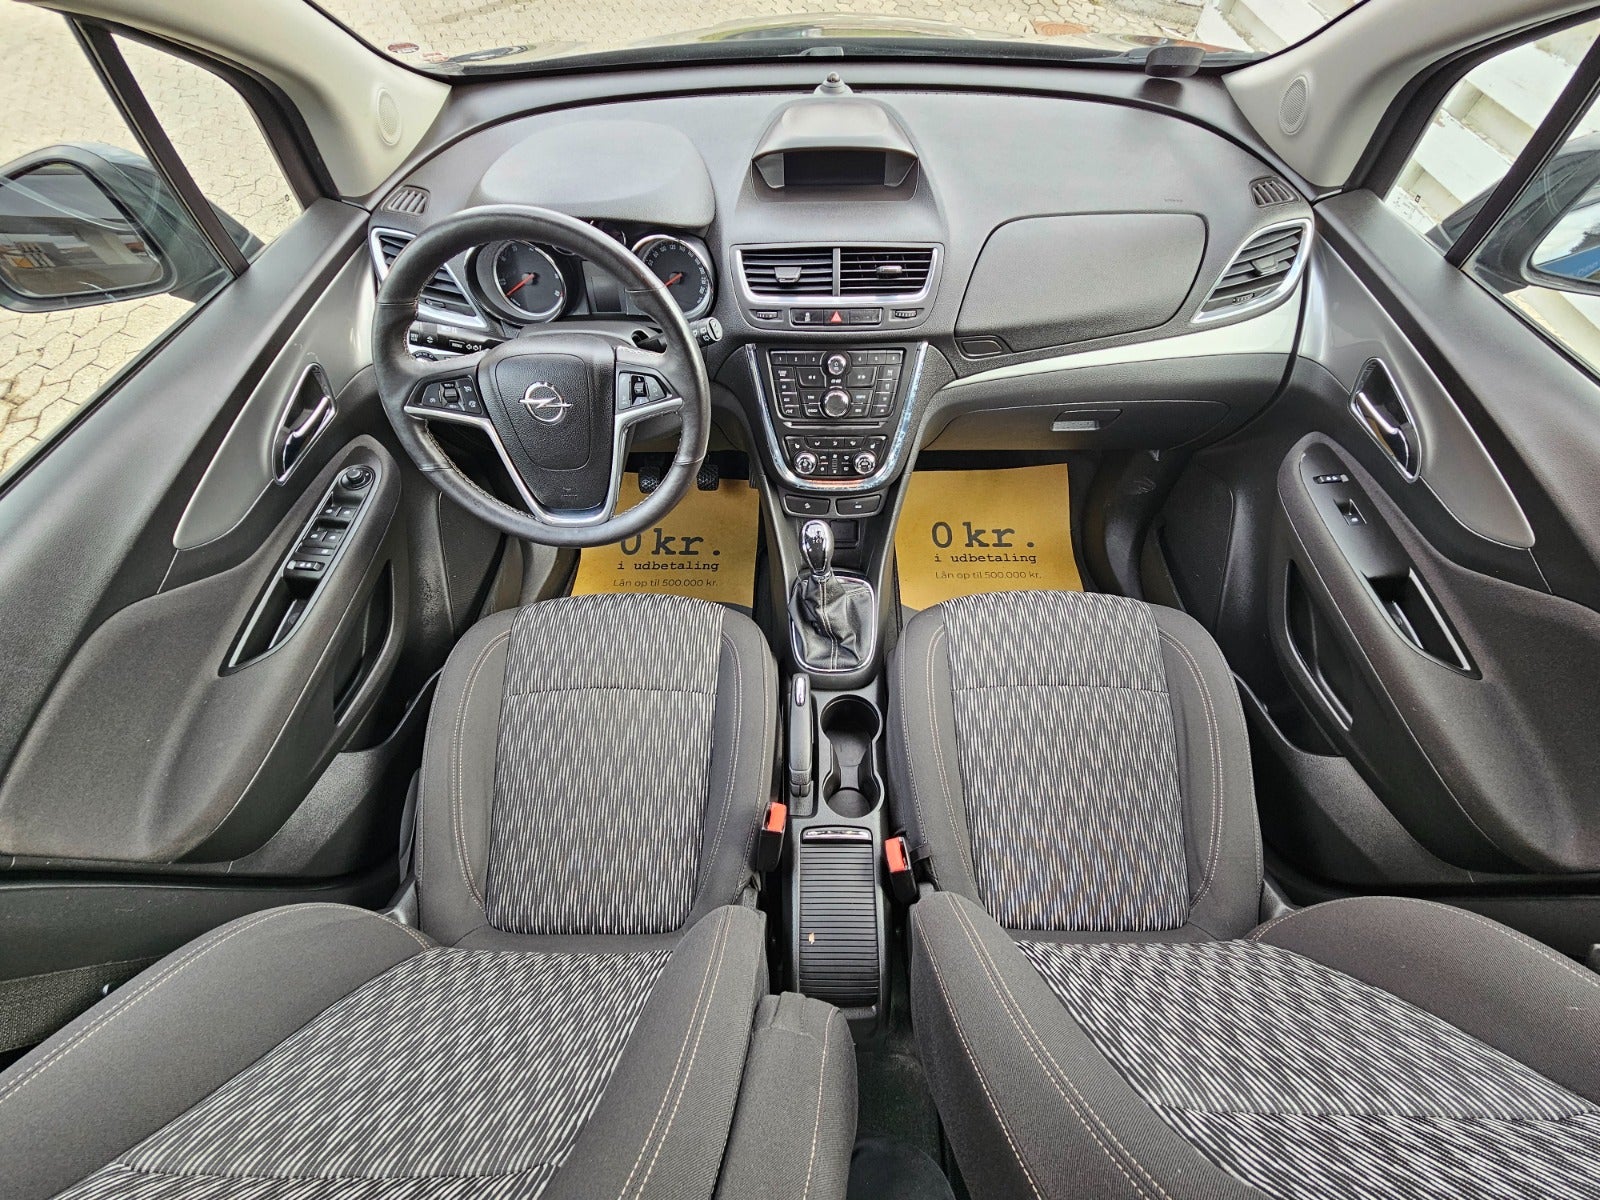 Opel Mokka 1,7 CDTi 130 Enjoy eco Diesel modelår 2014 km